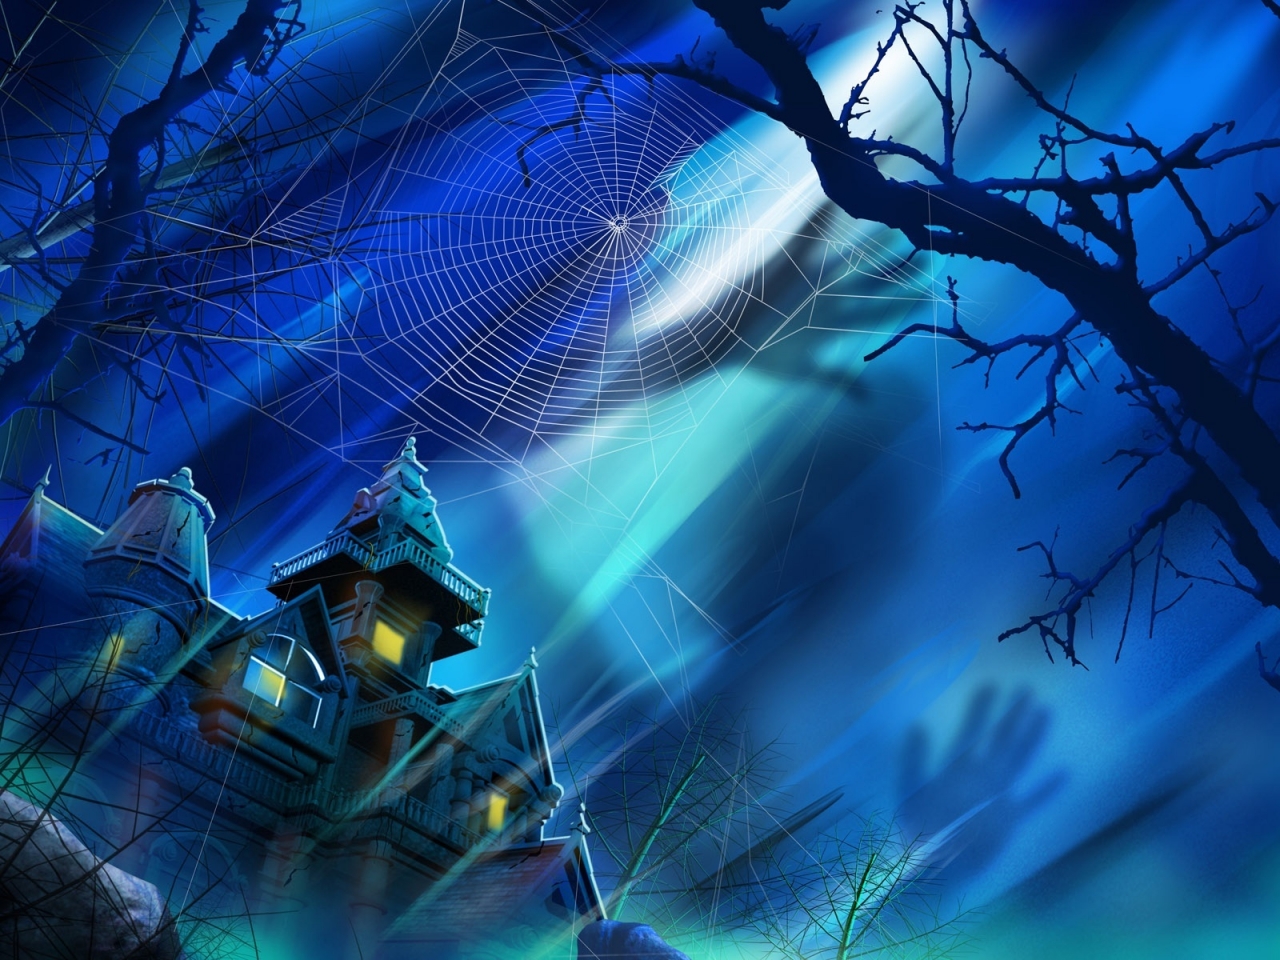 Halloween Night for 1280 x 960 resolution